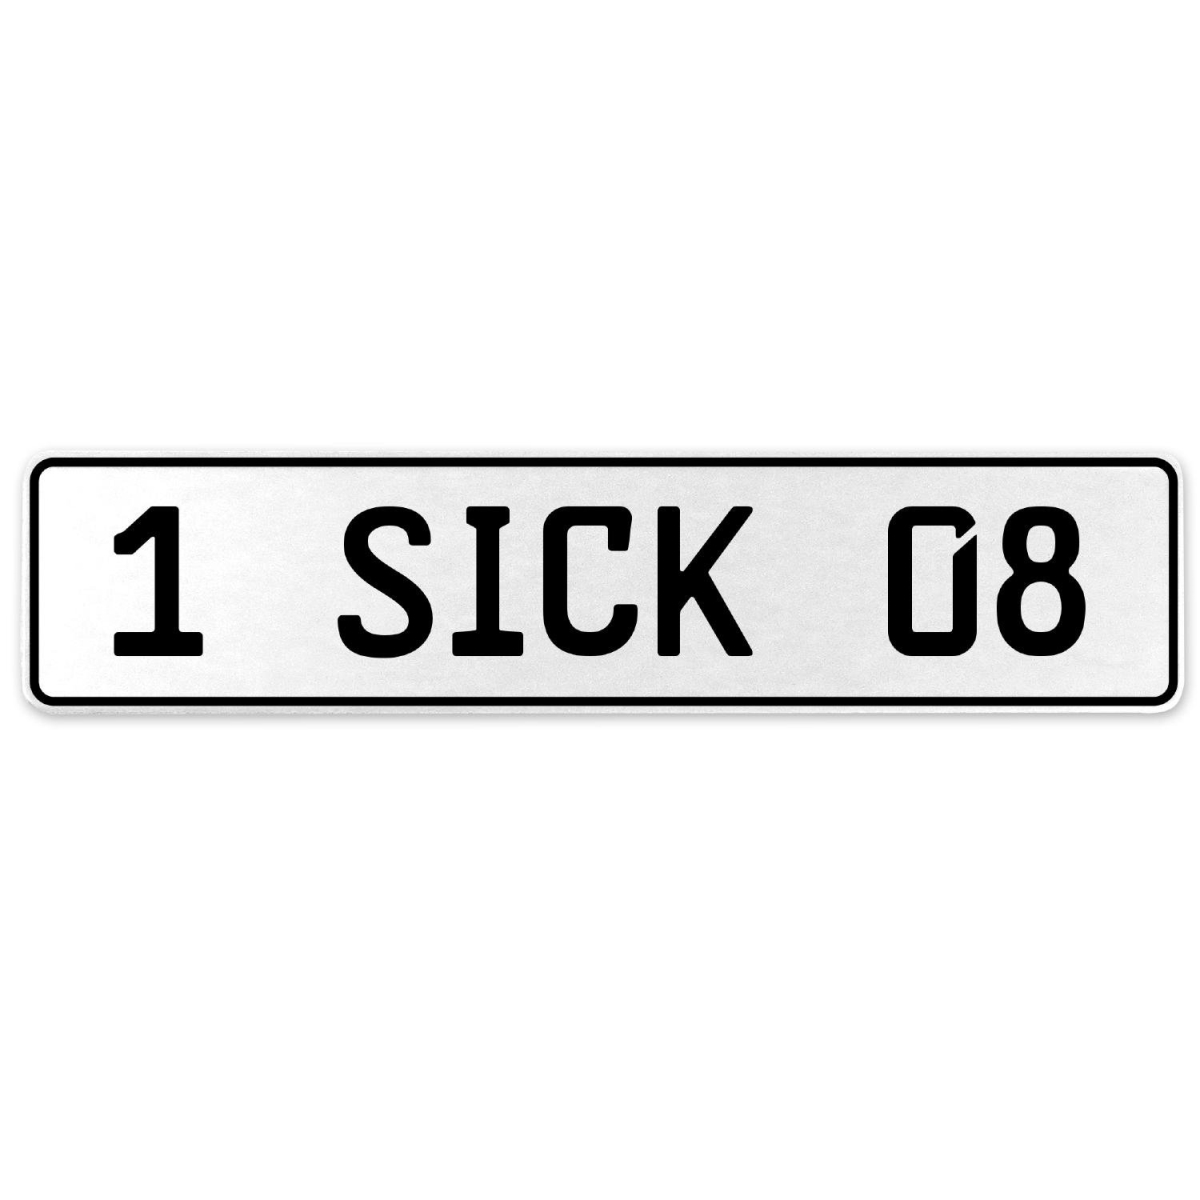 554407 1 Sick 08 - White Aluminum Street Sign Mancave Euro Plate Name Door Sign Wall